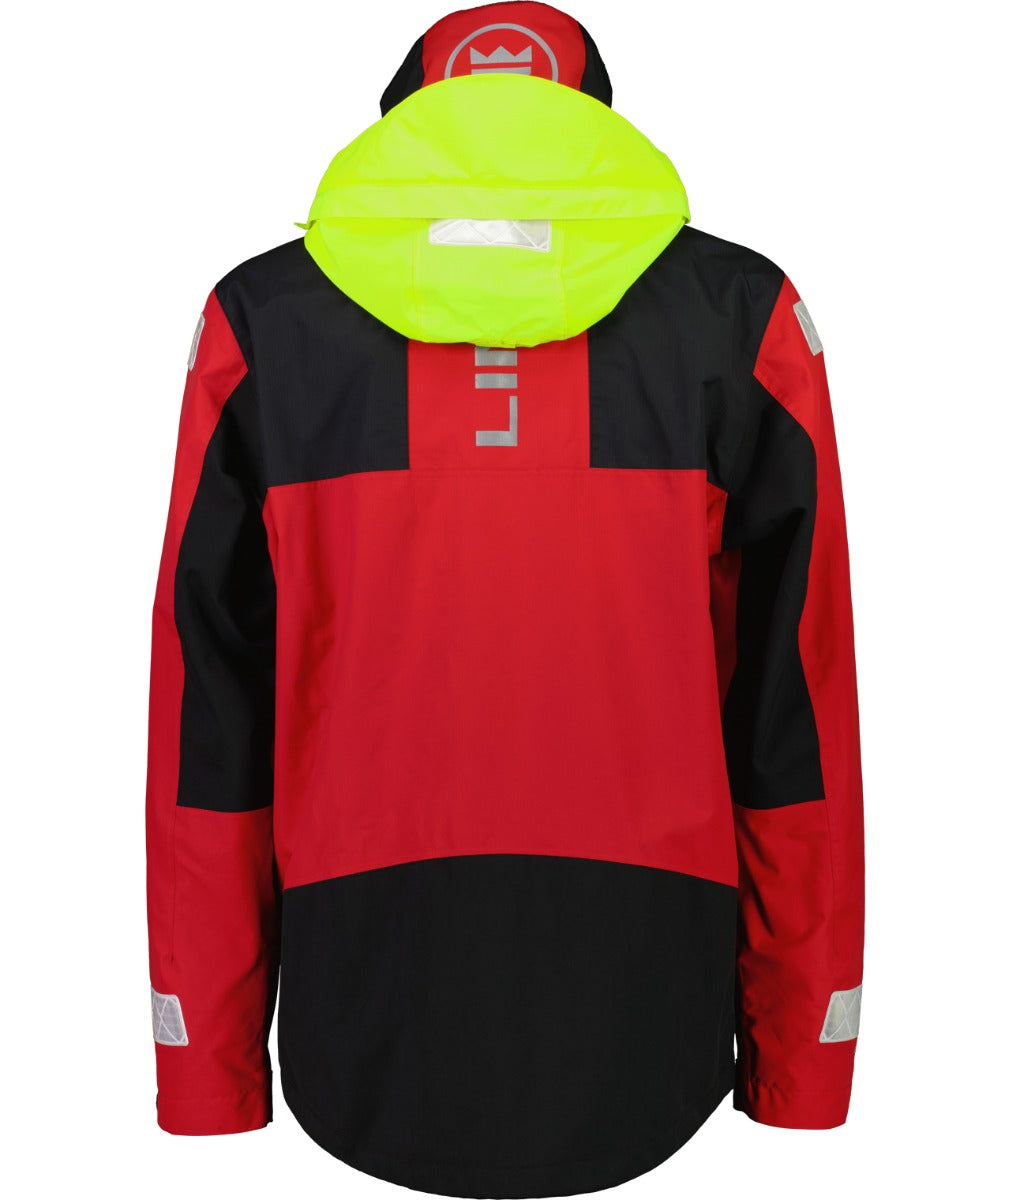 Line 7 Men's Ocean Pro20 Waterproof Jacket Red/Black